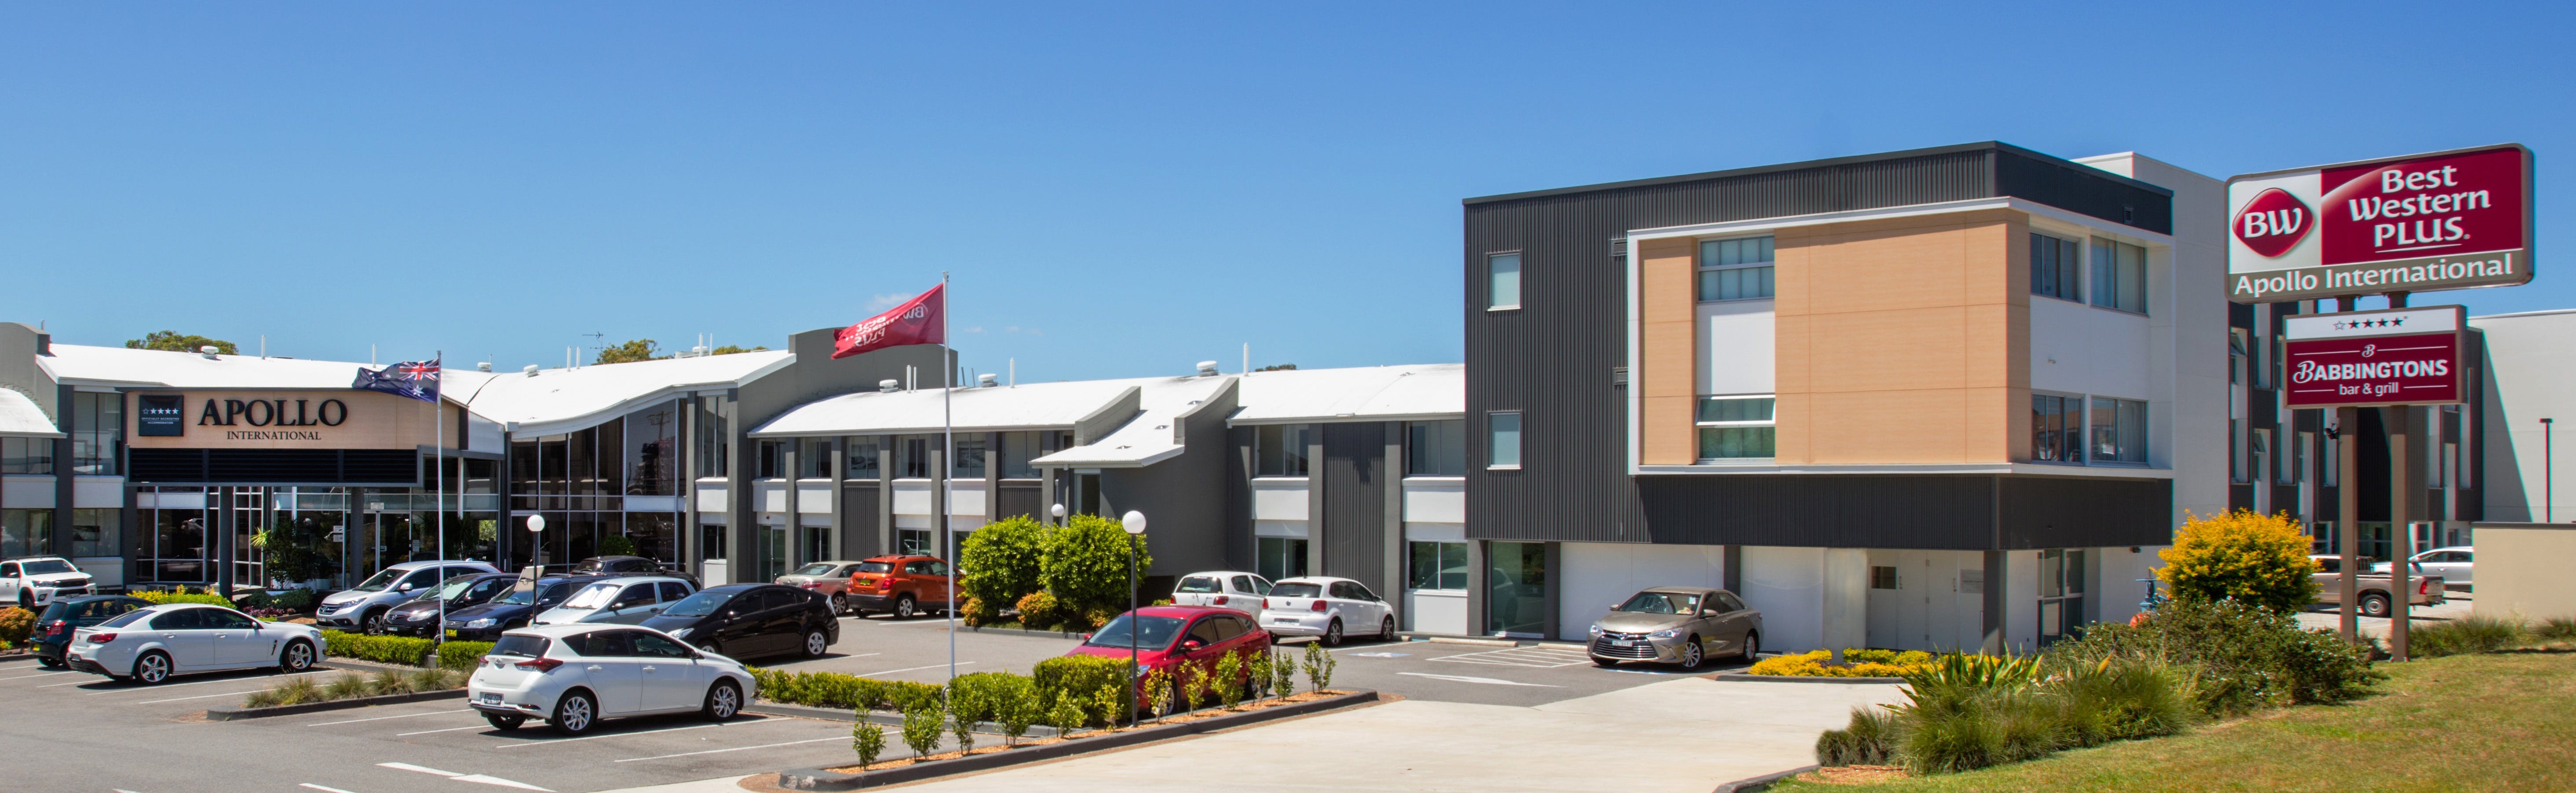 Best Western Plus Apollo International Hotel - Accommodation Port Hedland